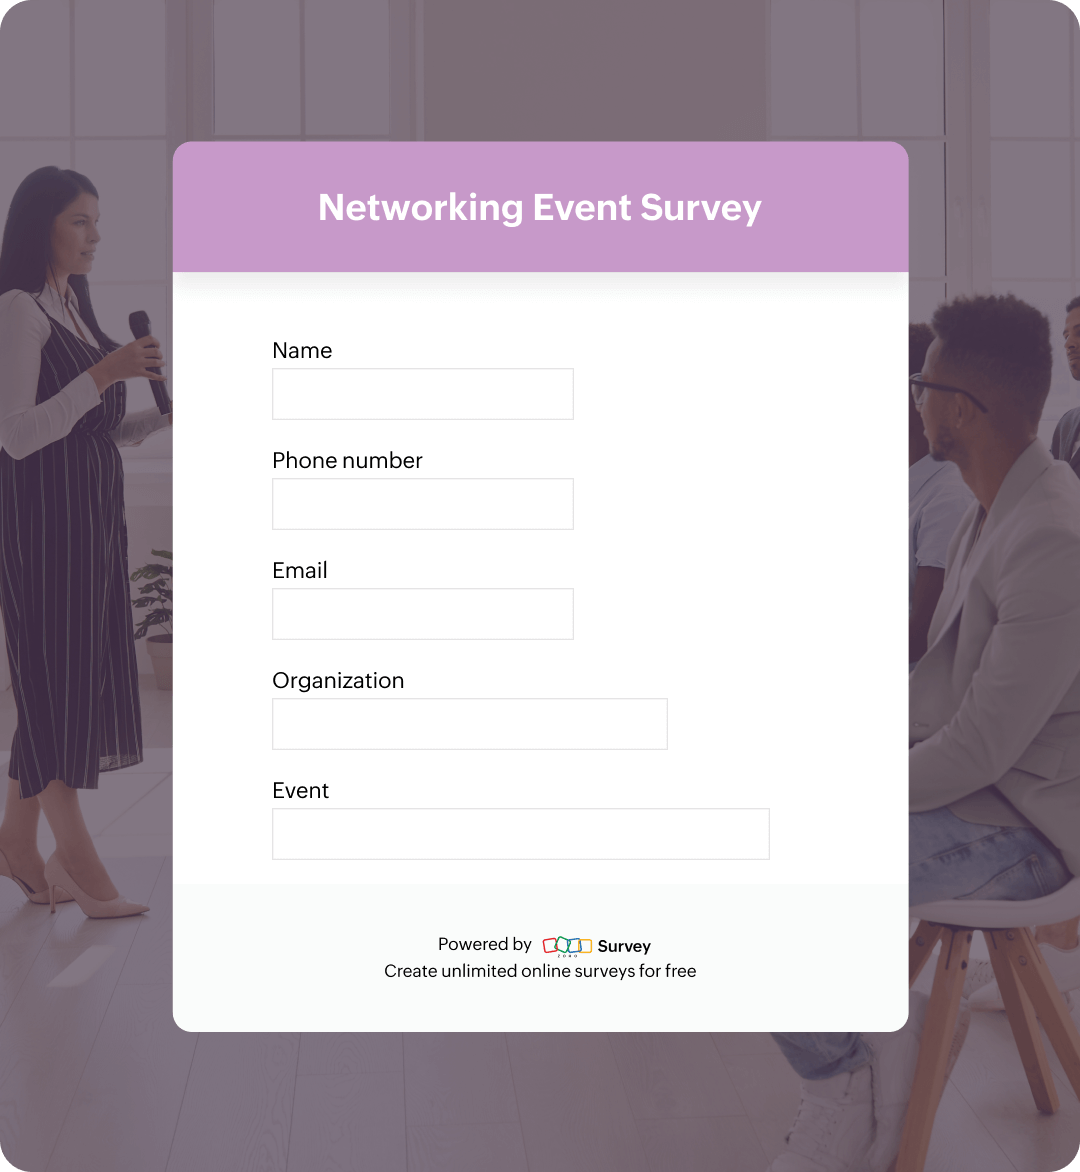 Networking event survey questionnaire template